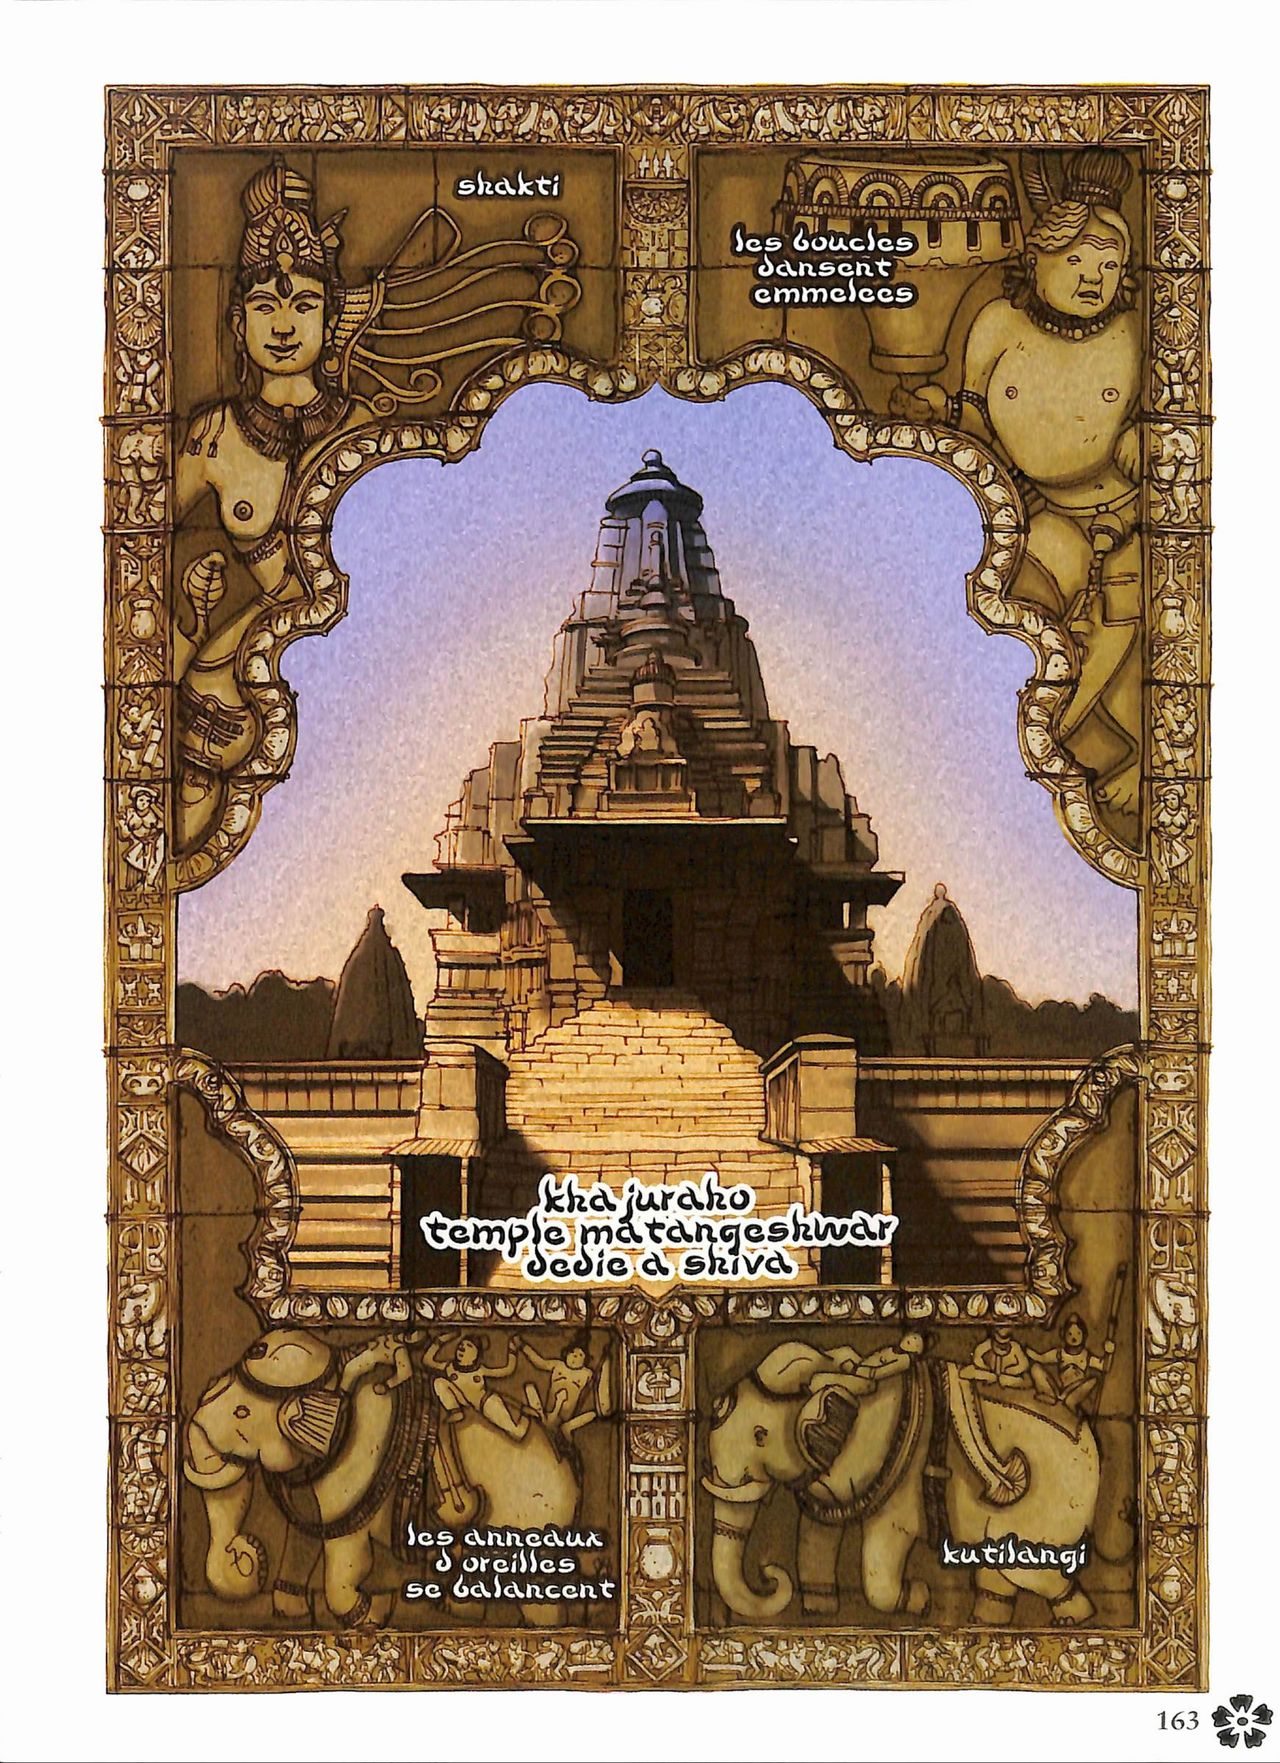 Kama Sutra en bandes dessinées - Kama Sutra with Comics numero d'image 163